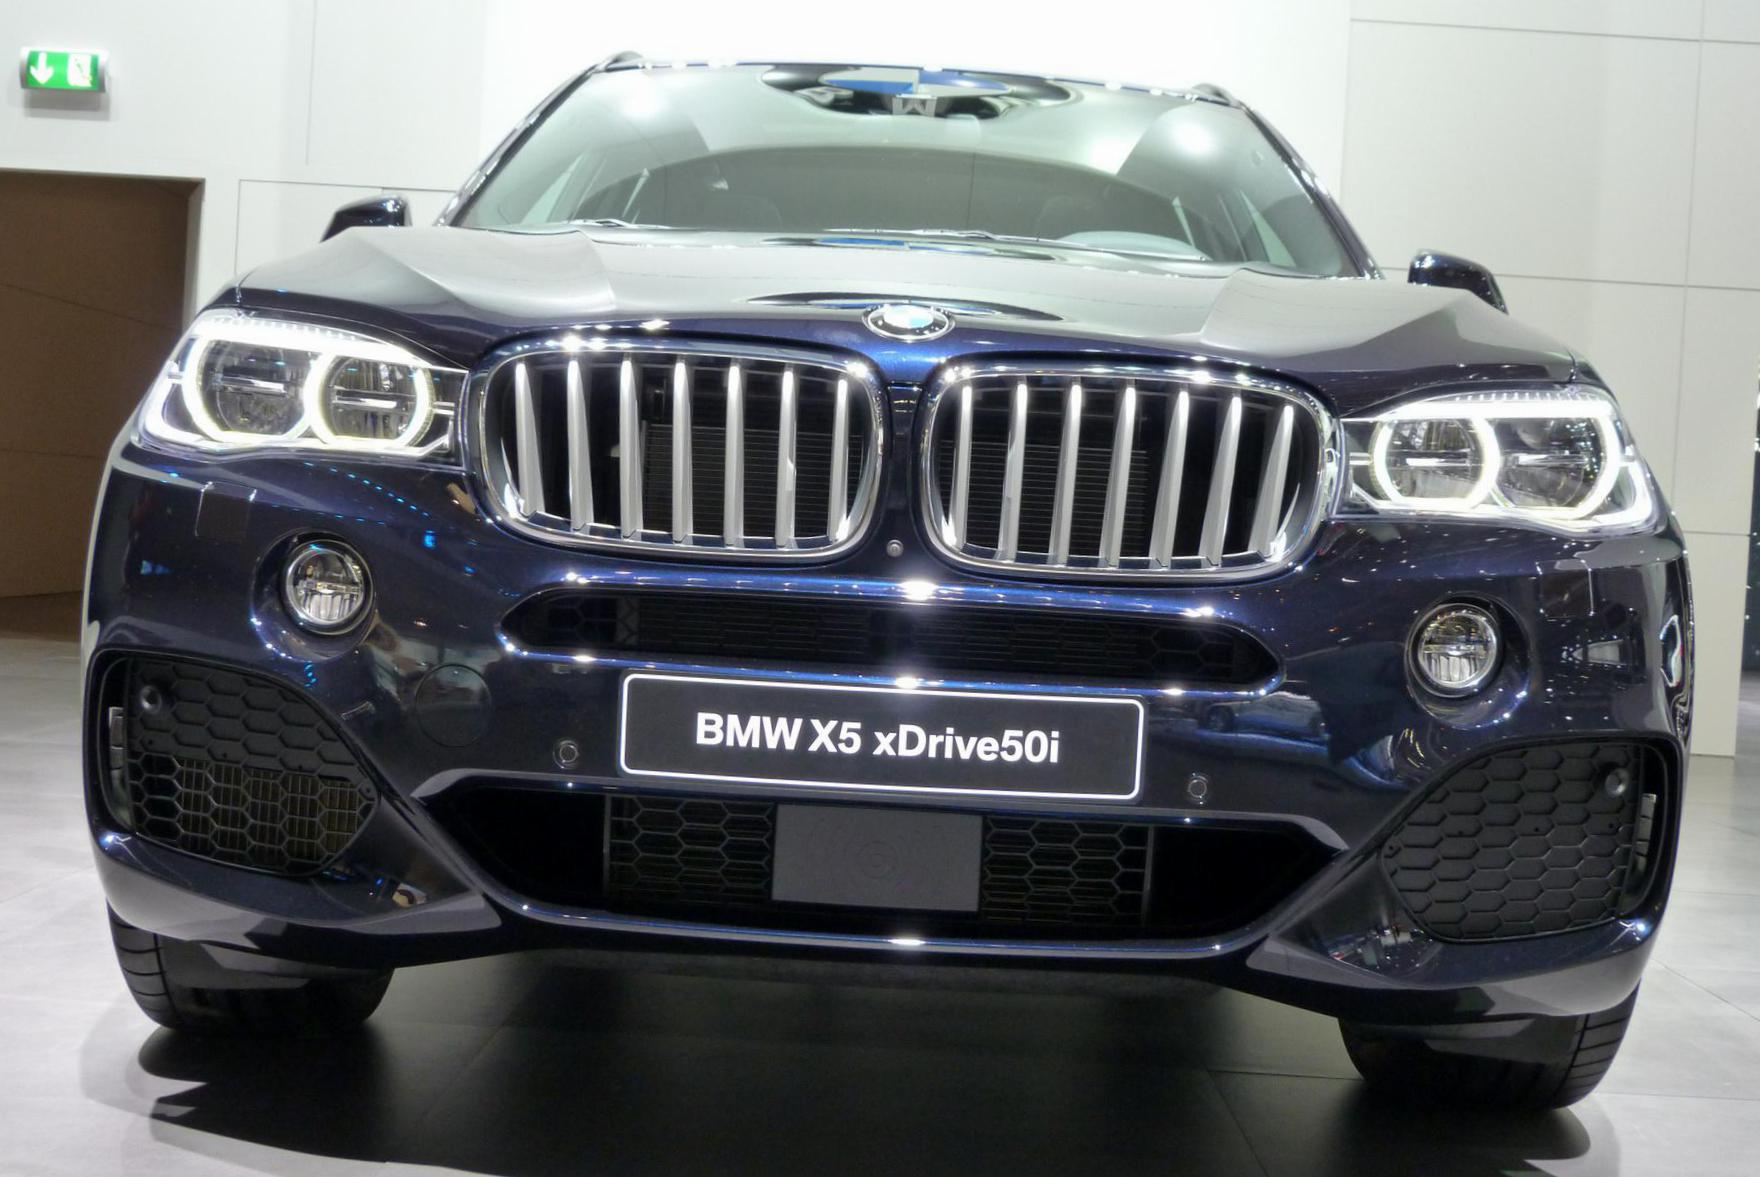 BMW X5 (F15) configuration cabriolet